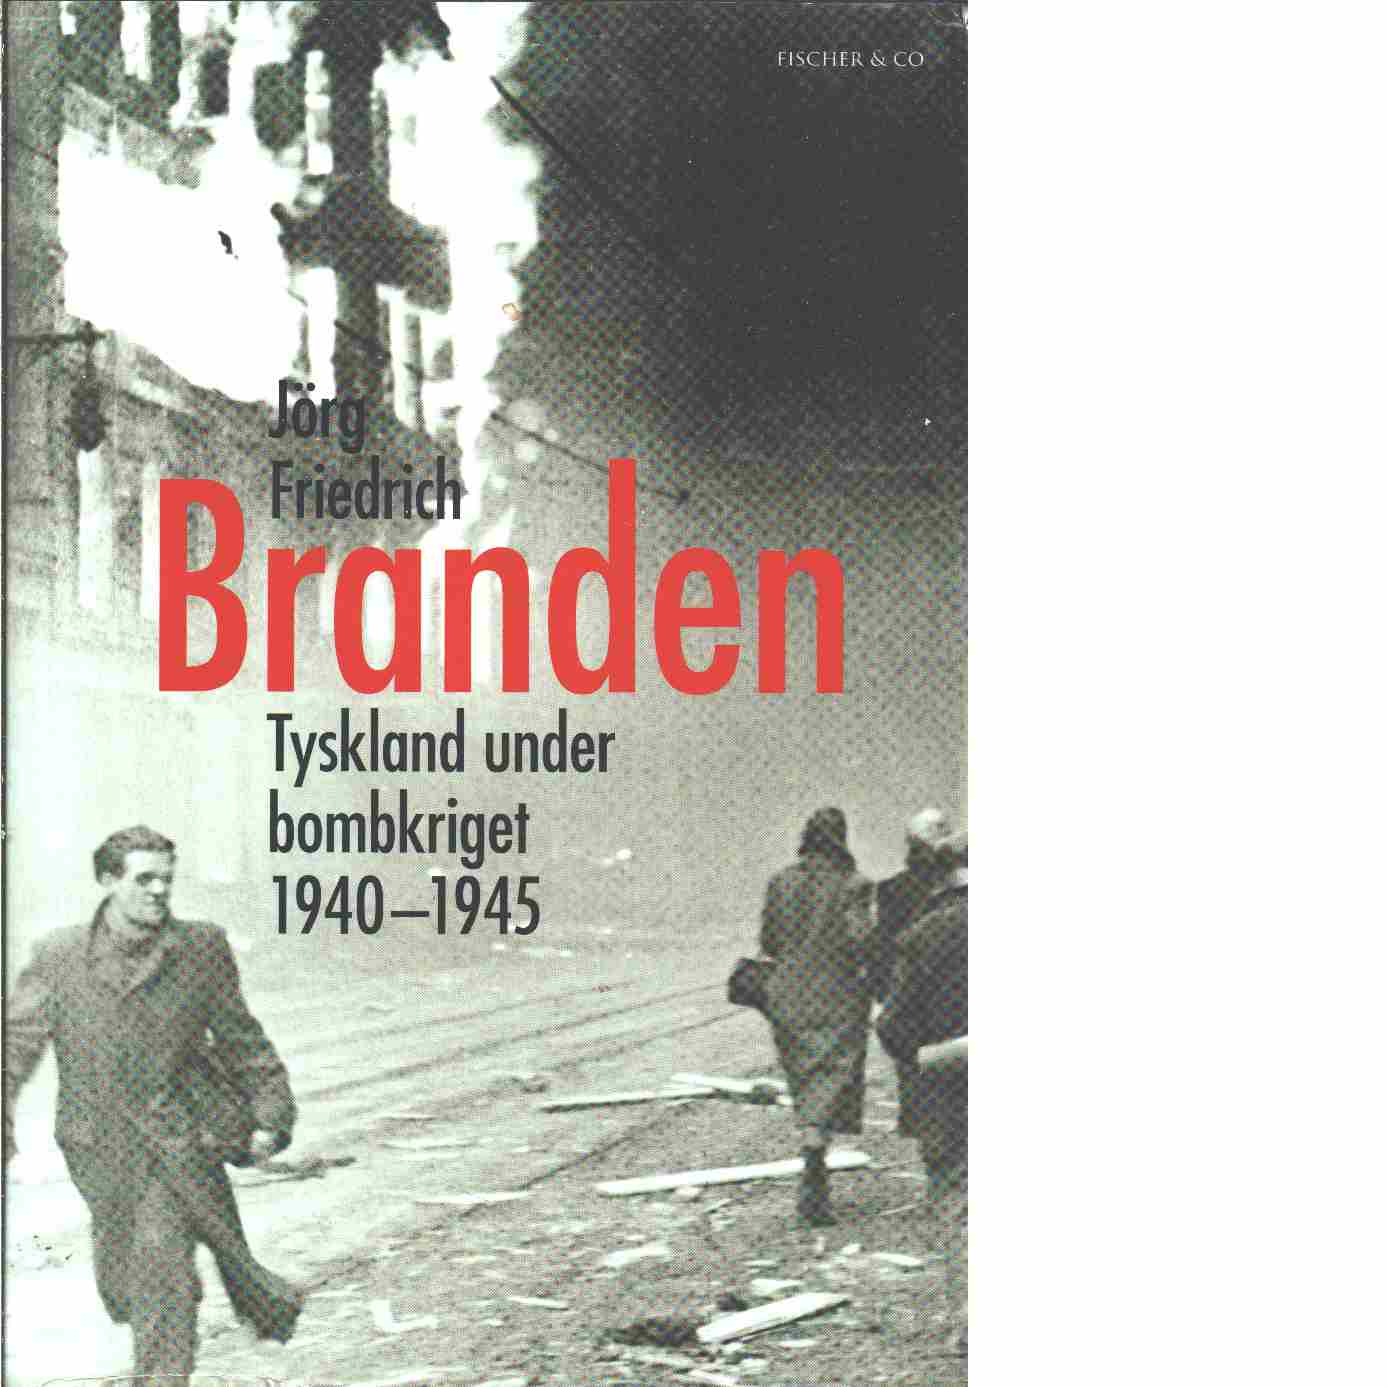 Branden : Tyskland under bombkriget 1940-1945 - Friedrich, Jörg